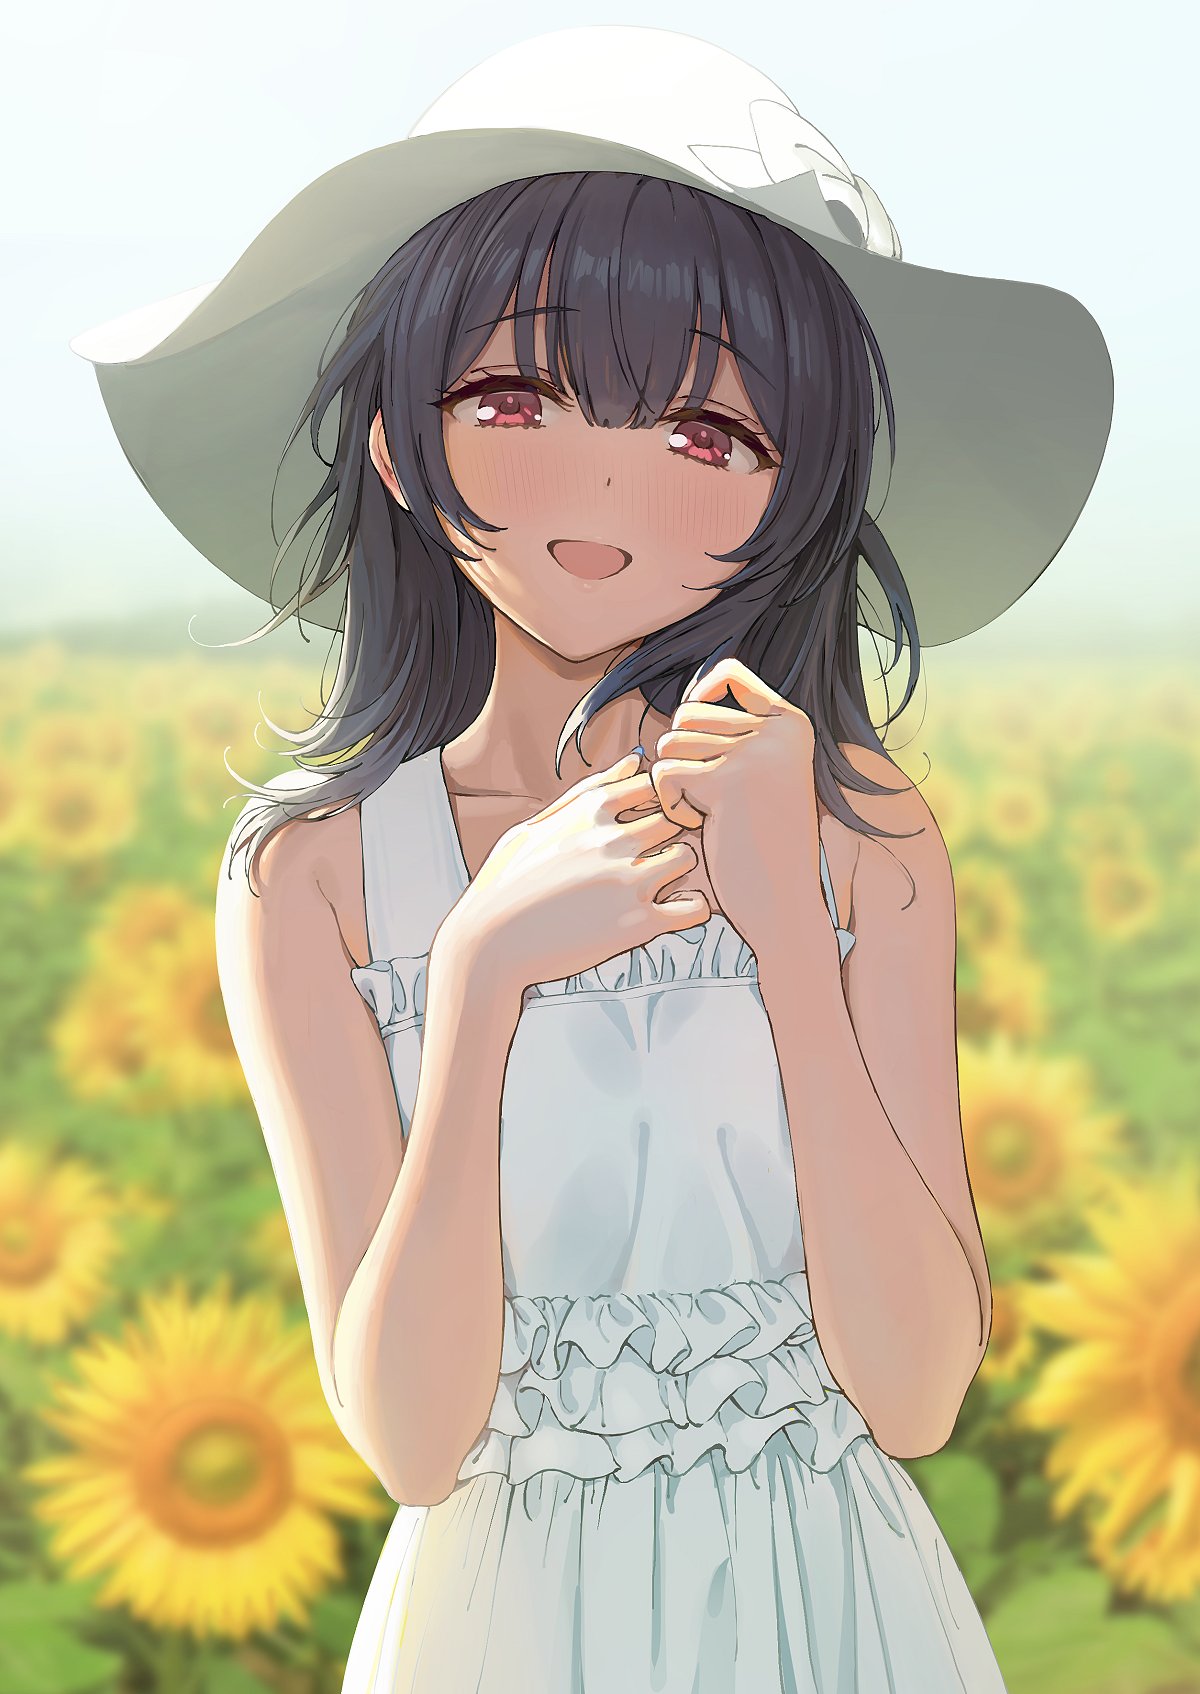 Anime 1200x1694 anime anime girls digital art artwork 2D portrait display sun dress hat sunflowers dark hair red eyes Ameyame Rinze Morino THE iDOLM@STER